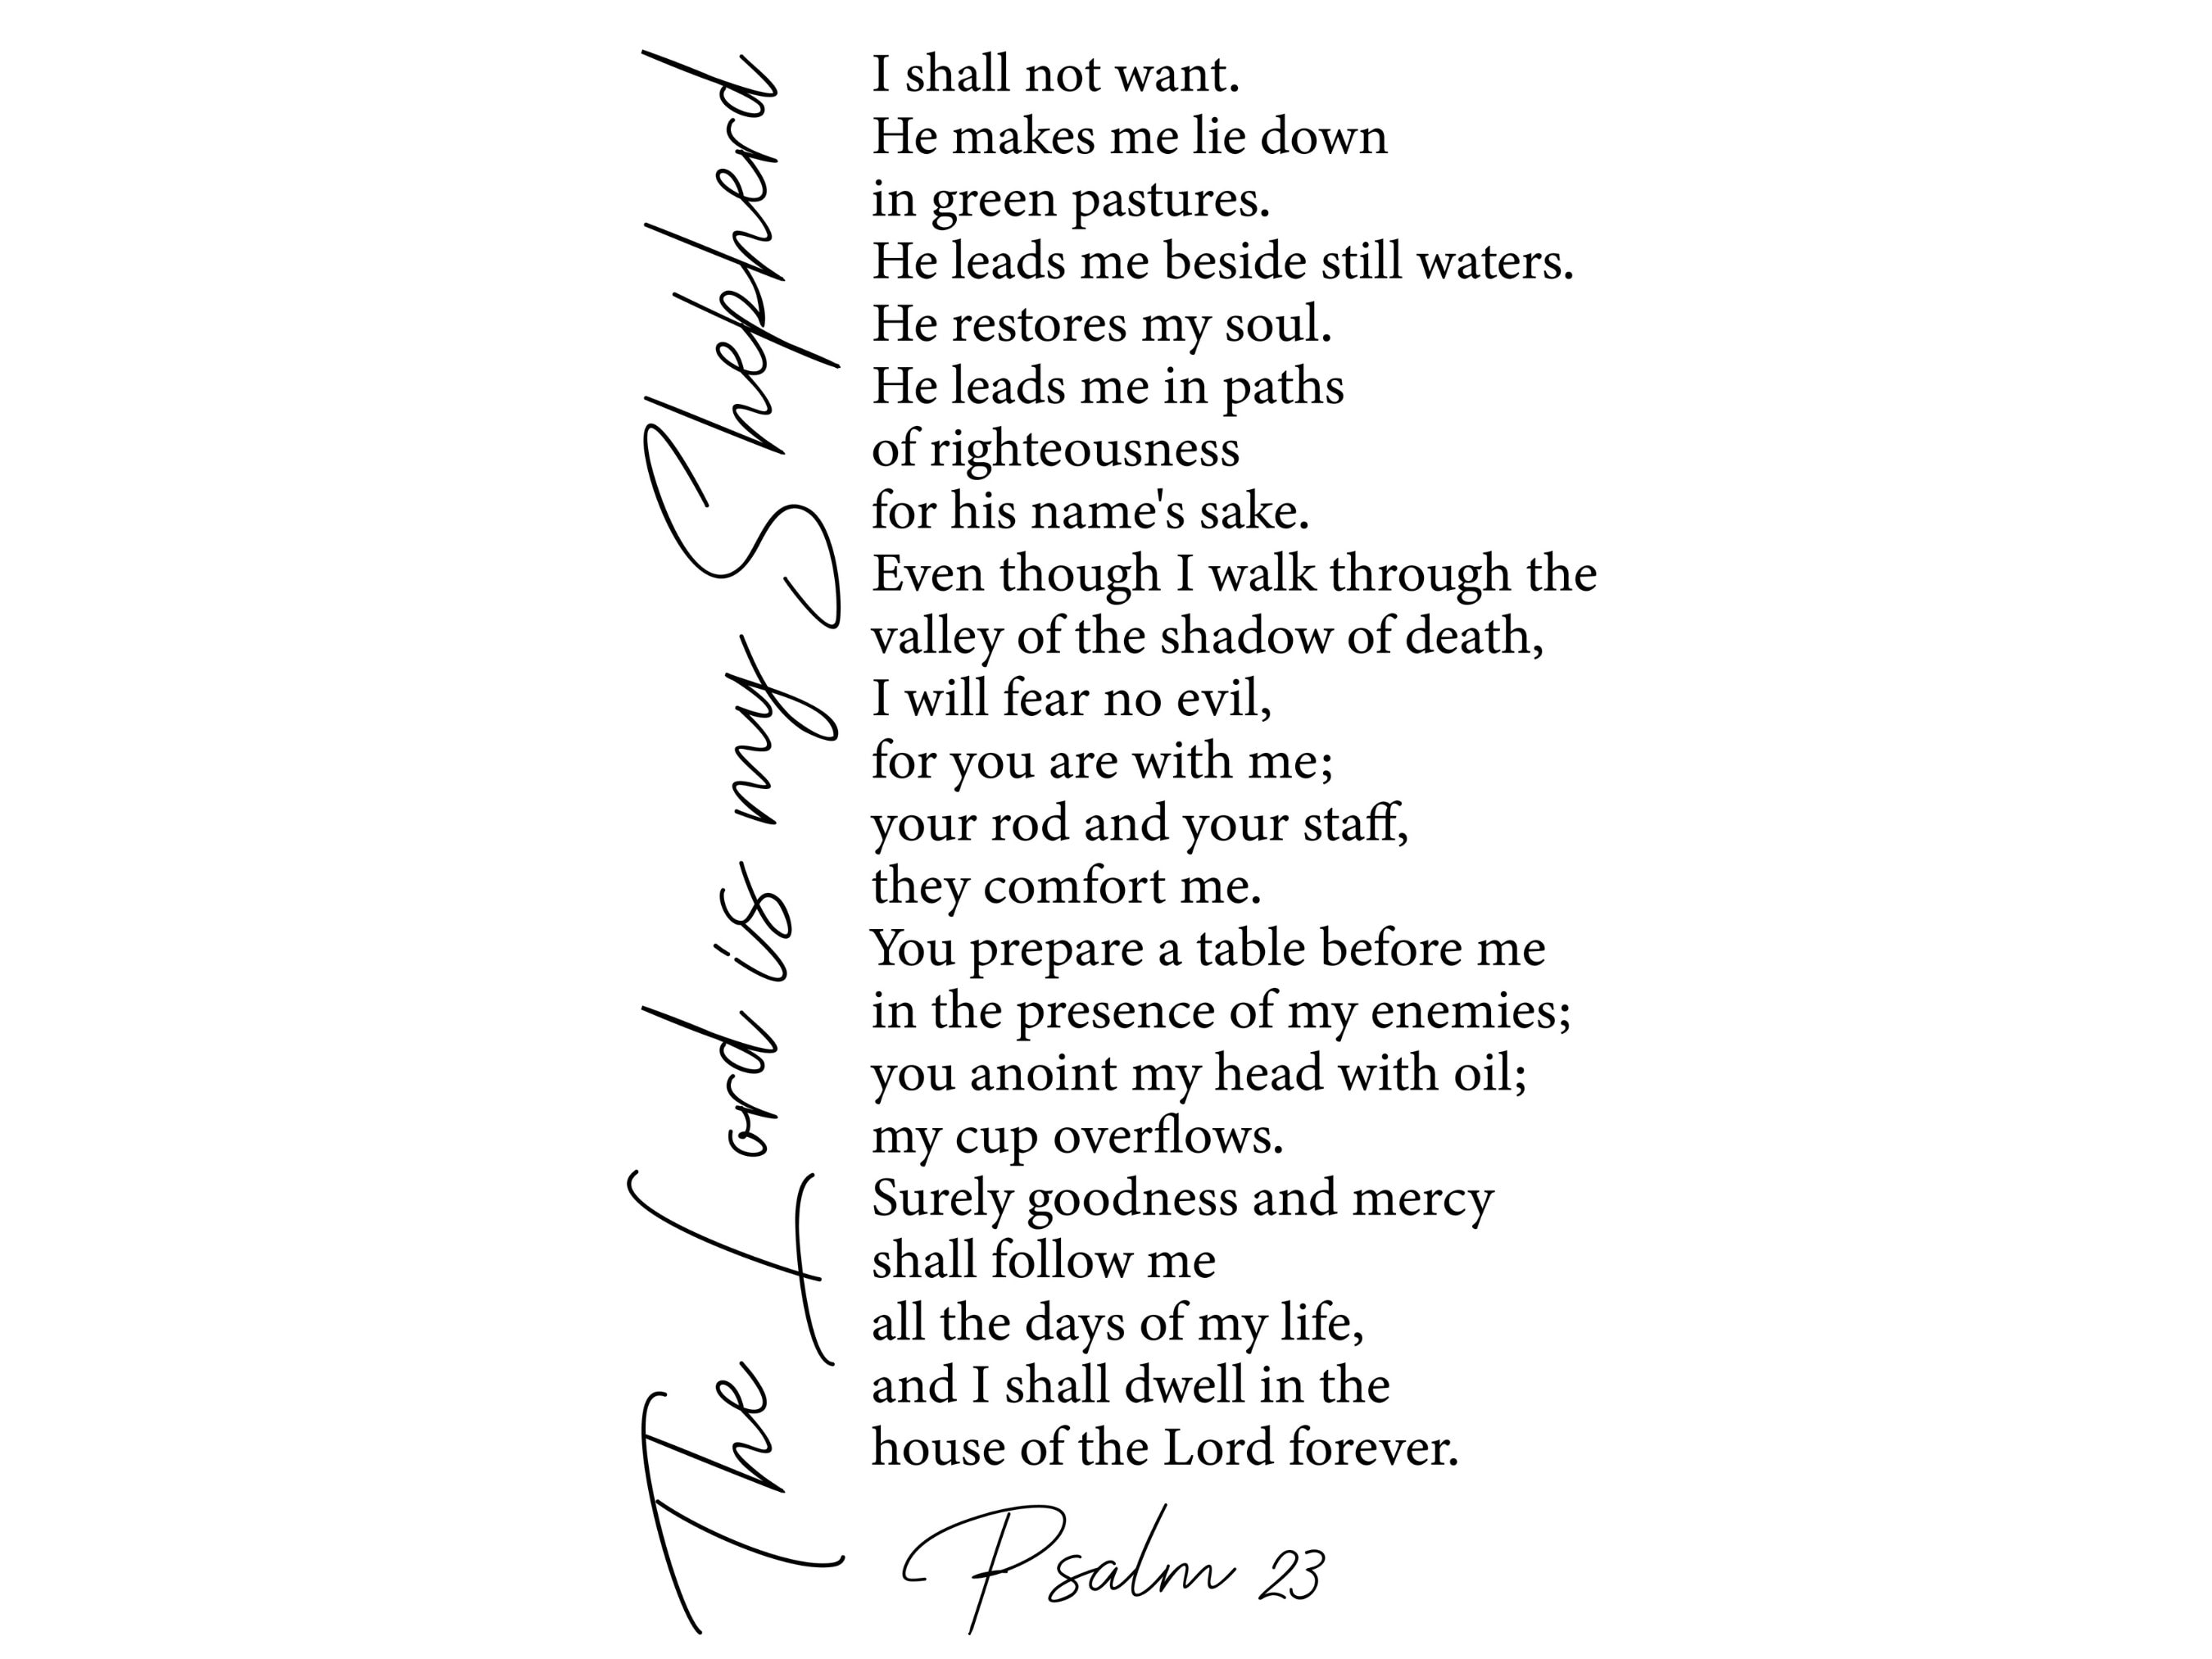 Salmo 23 (Psalm 23) on Behance